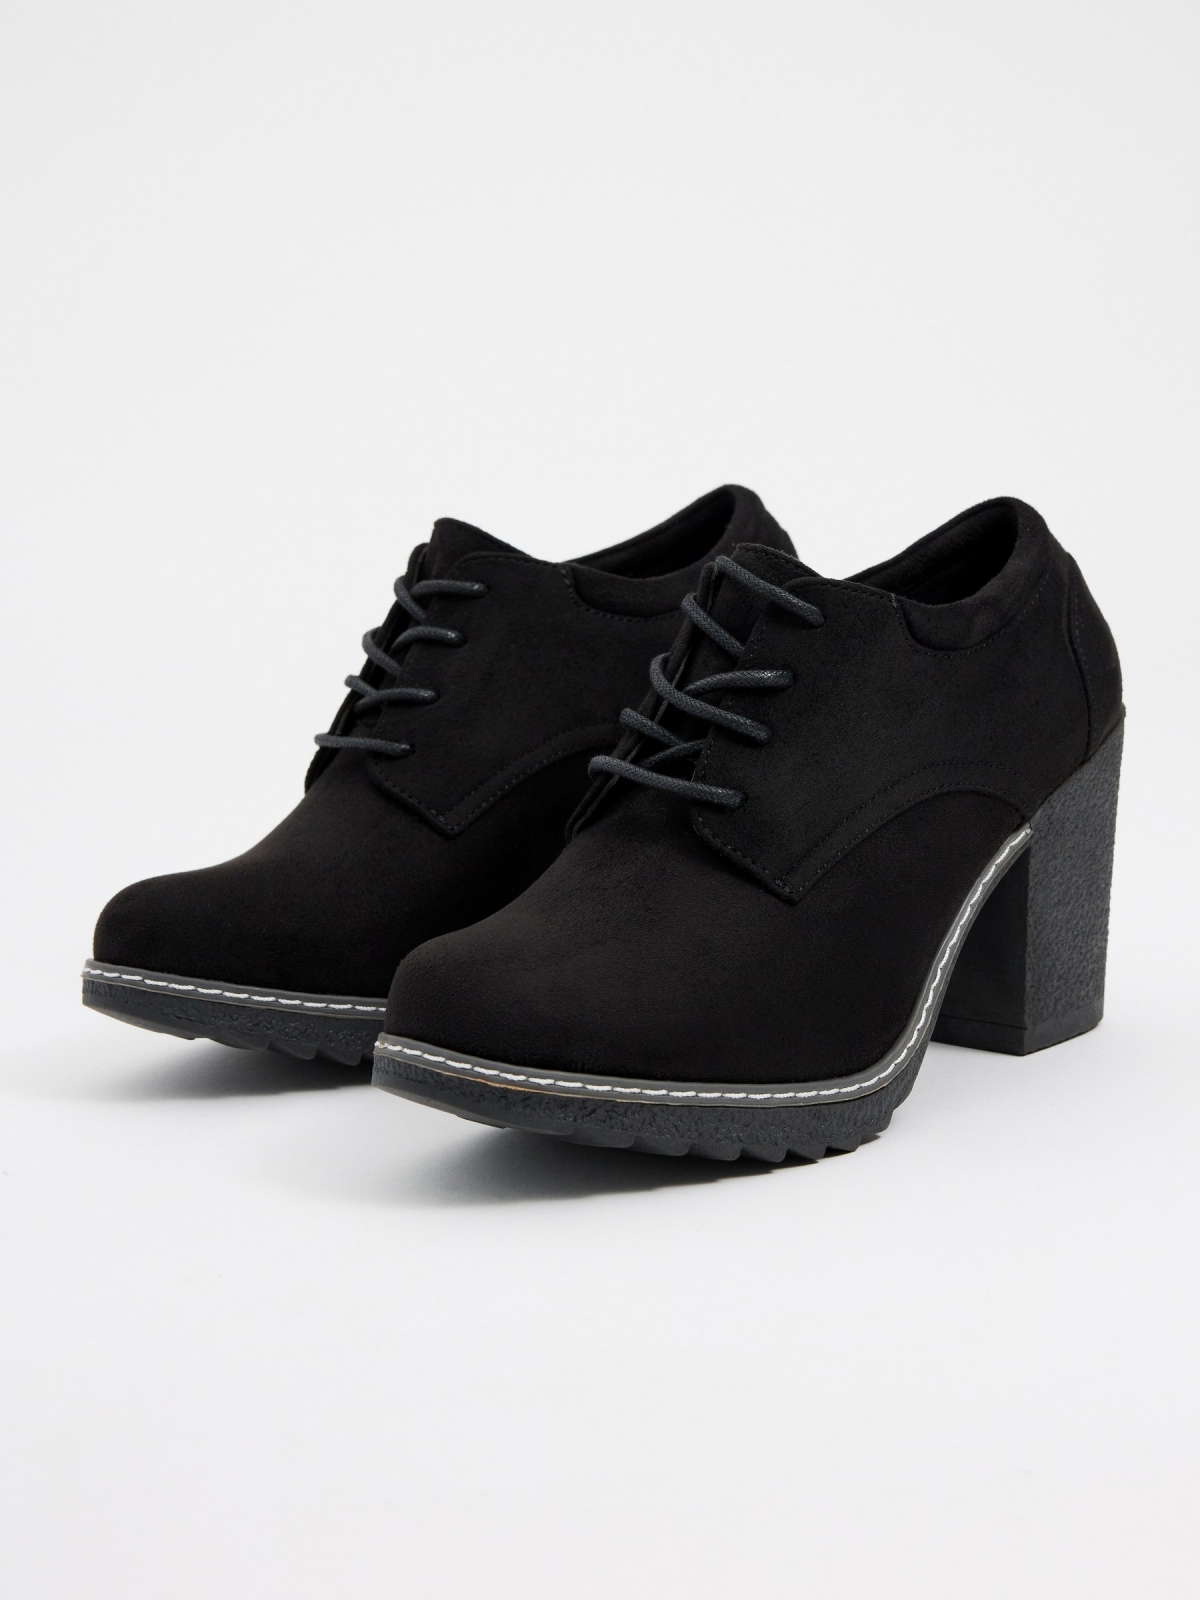 Black lace-up high-heeled shoe black 45º front view